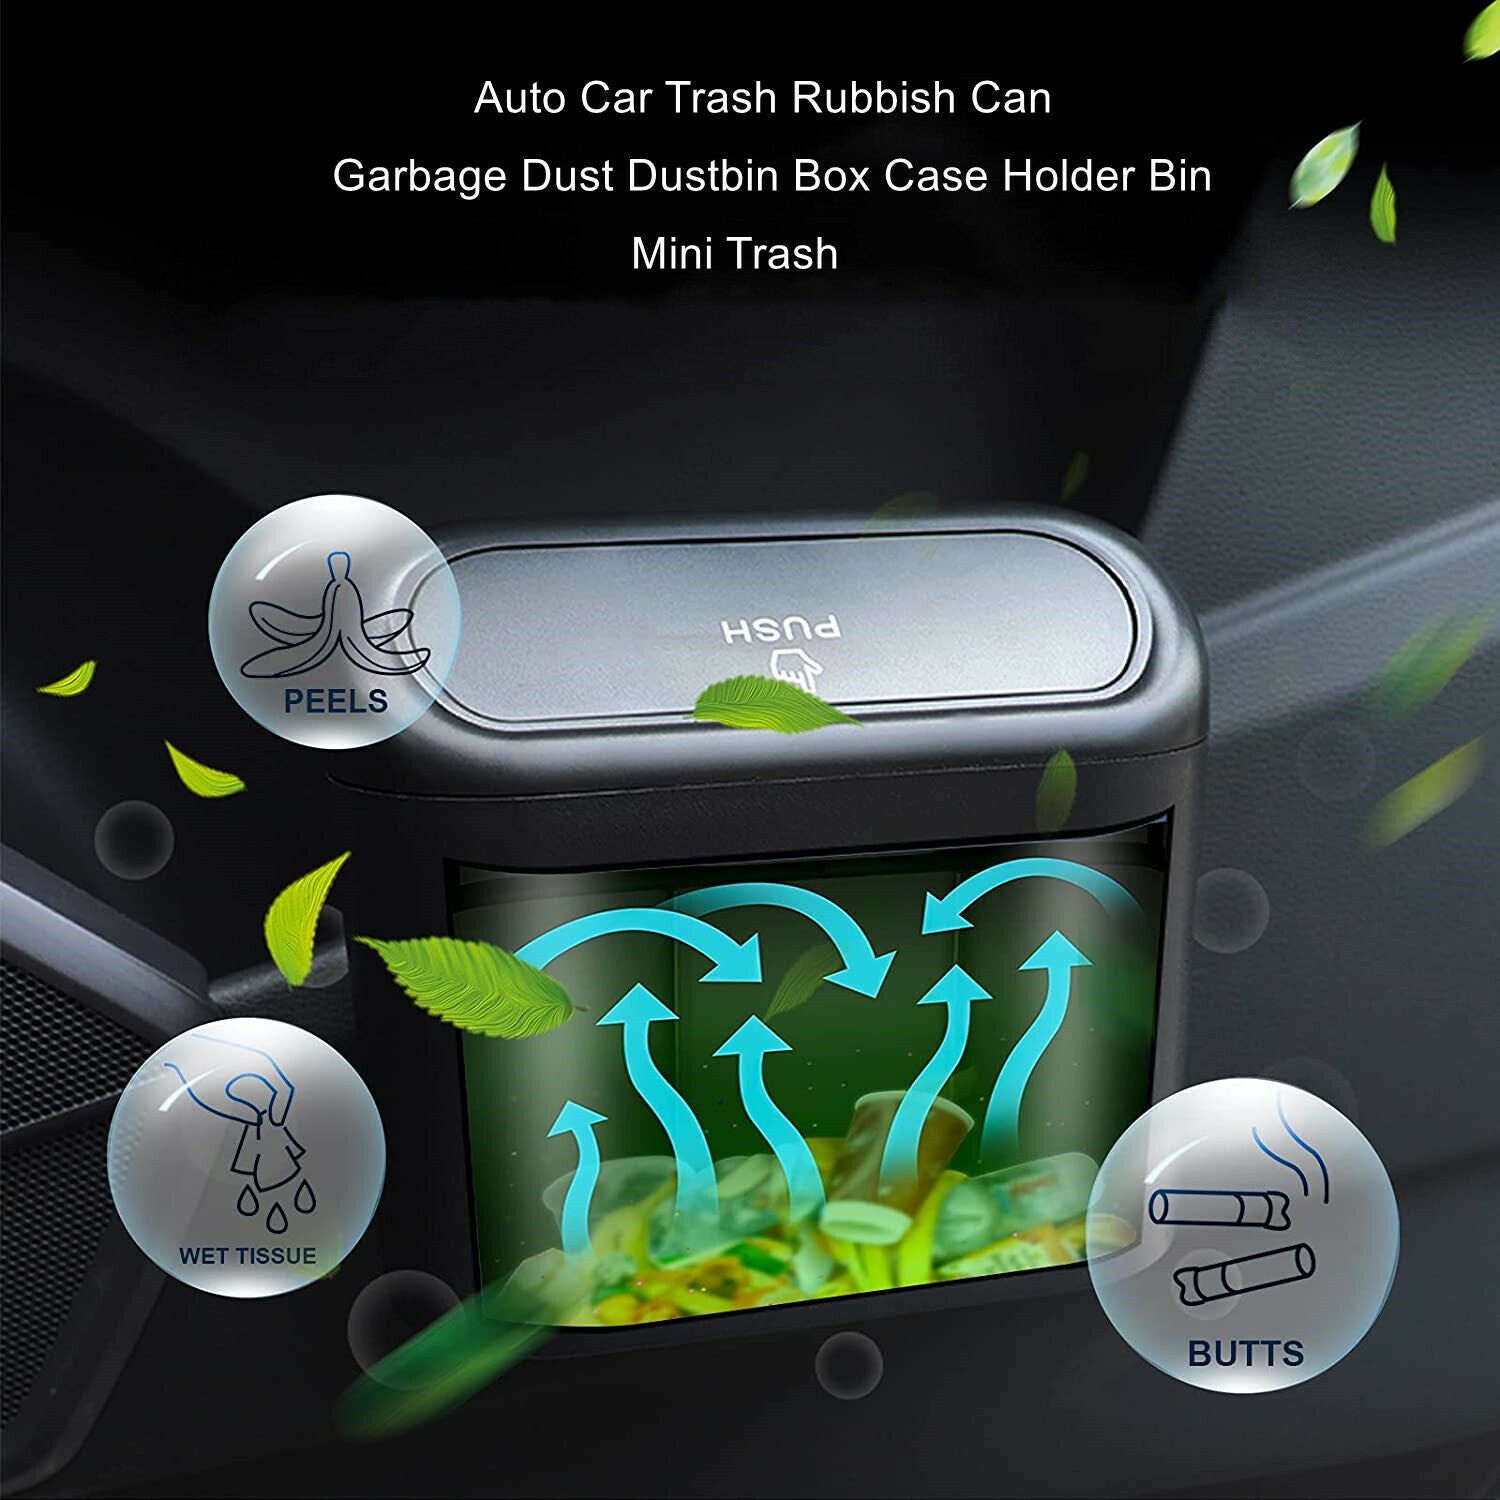 Auto Car Trash Rubbish Can Garbage Dust Dustbin Box Case Holder Bin Mini Trash